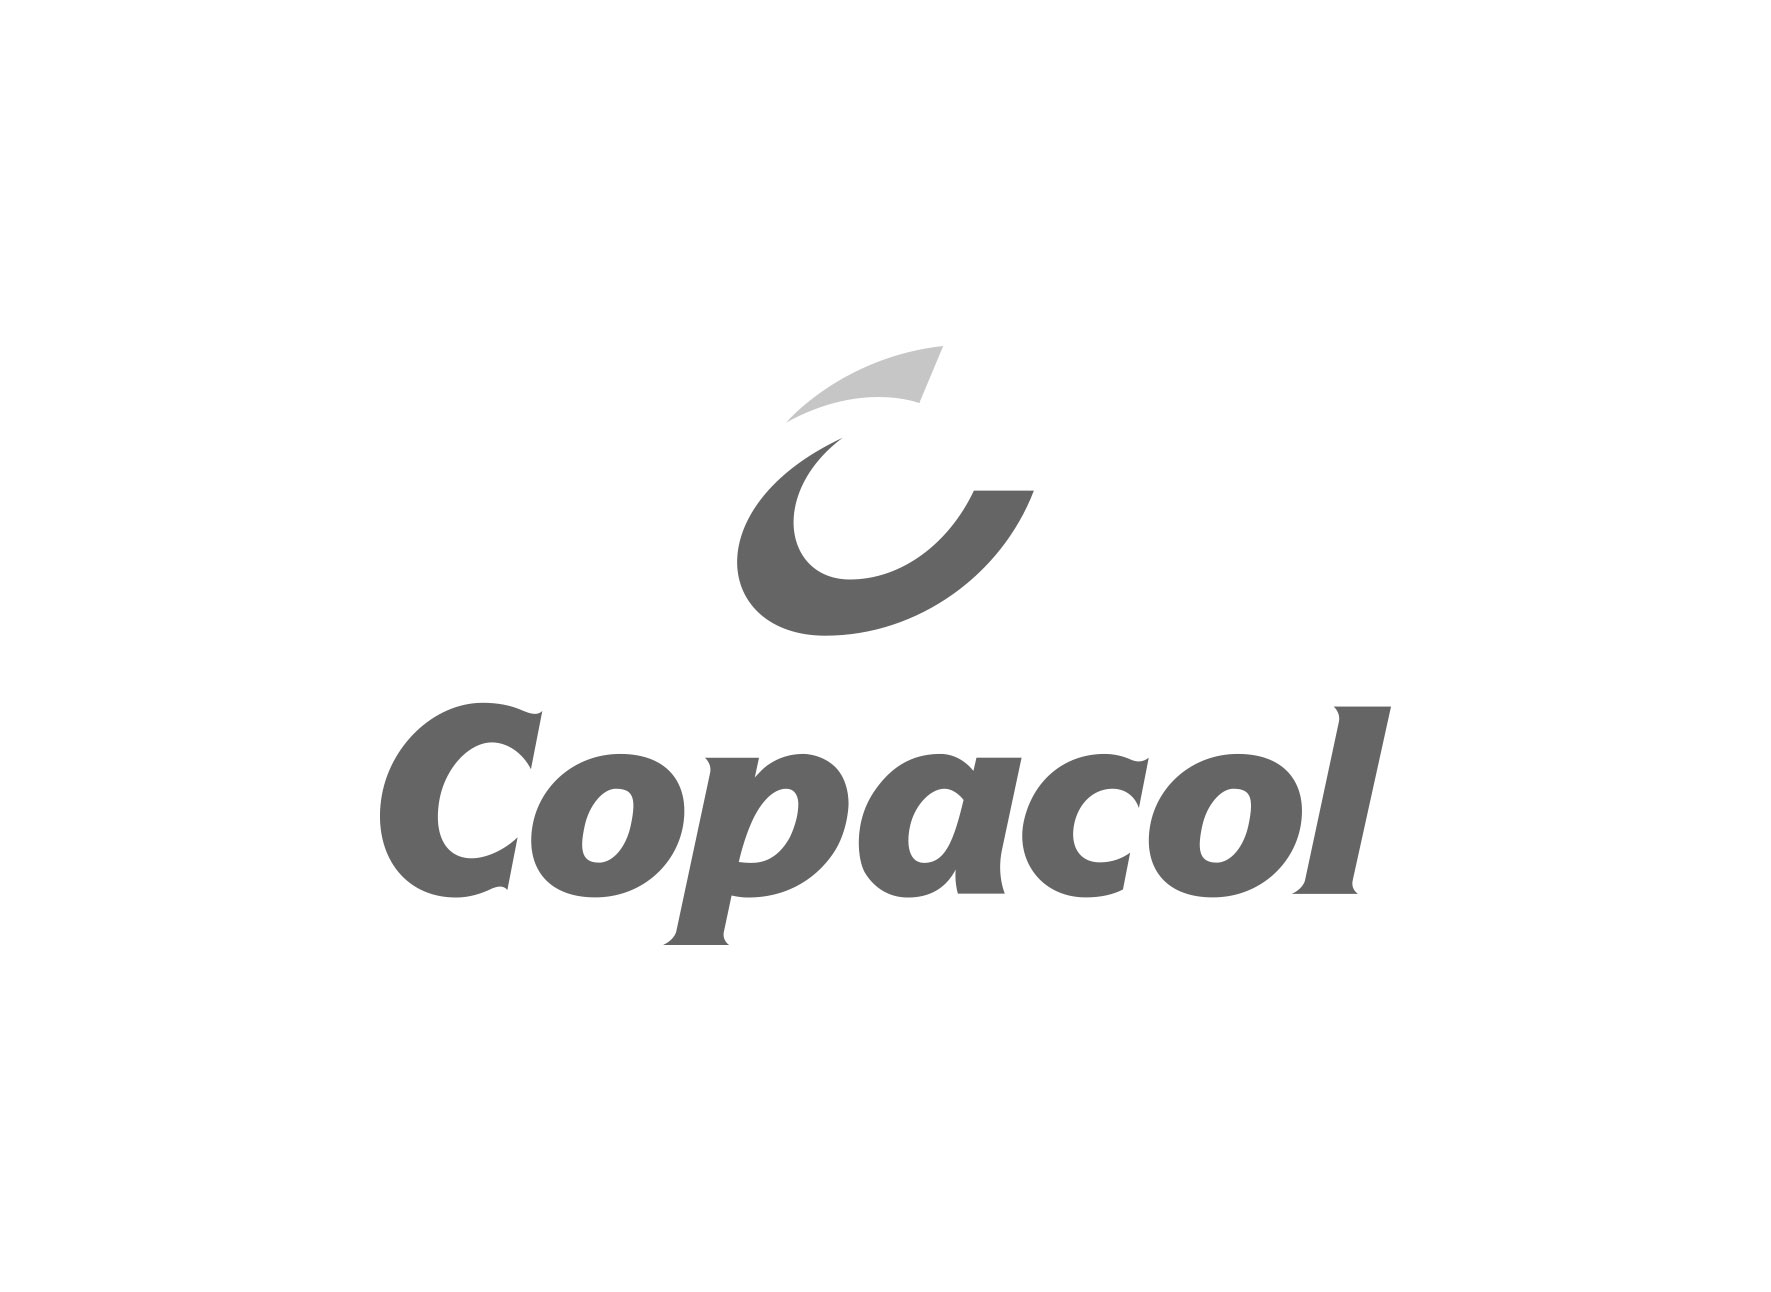 COPACOL